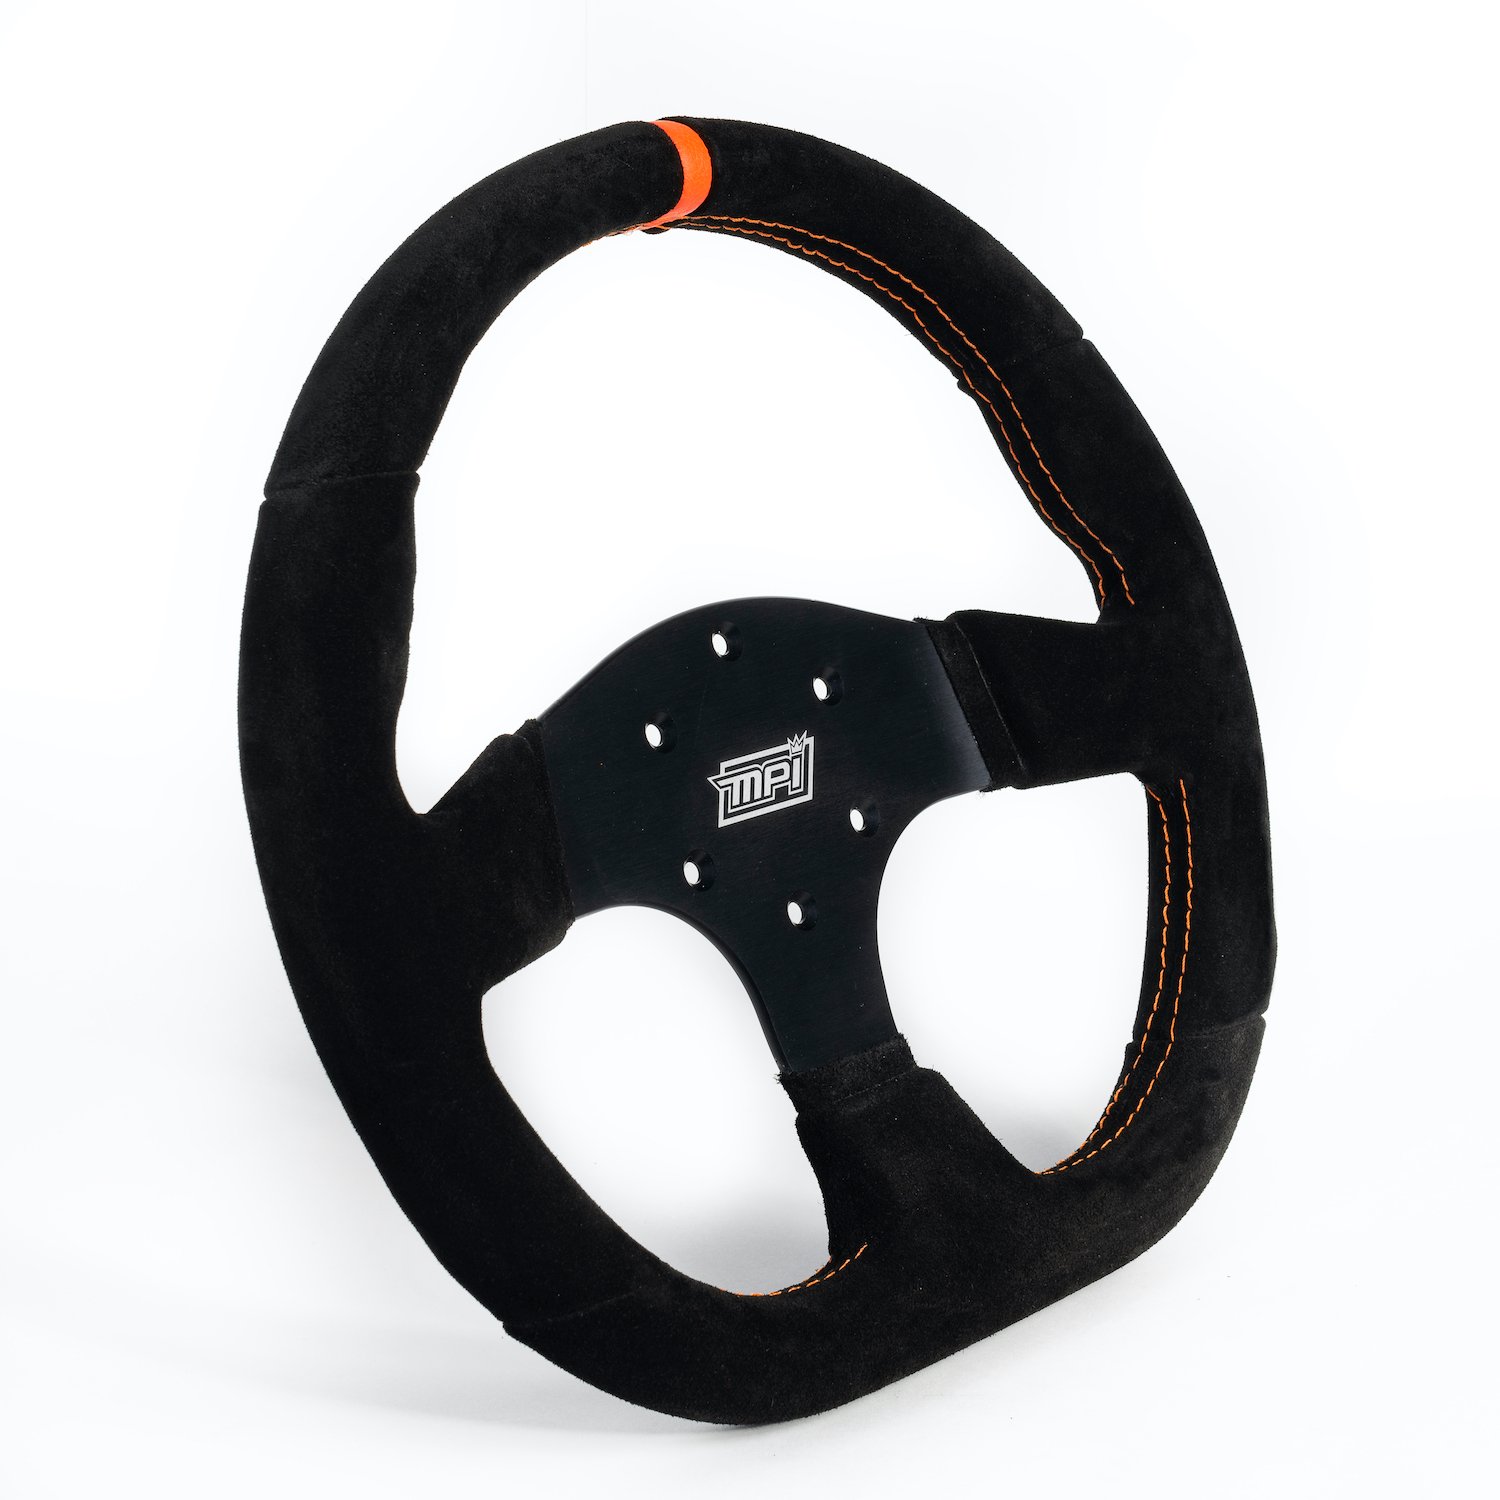 Road Course/Track Day Steering Wheel 13 in. Diameter